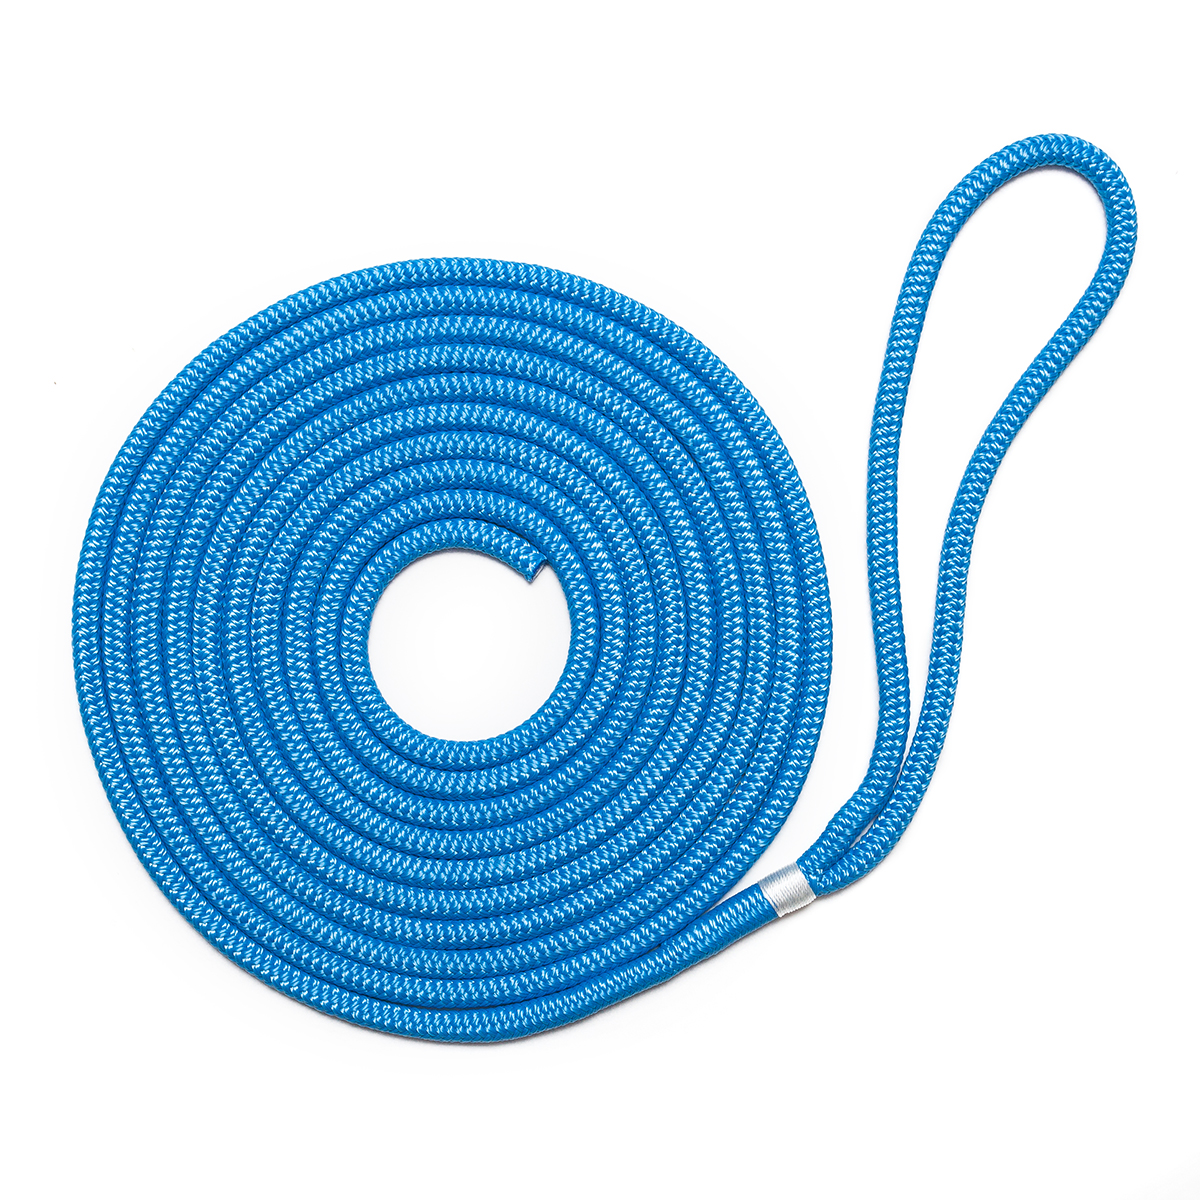 Шнур плетеный швартовый с огоном 12,0 мм, голубой, 2200 кг, 6 м, евромоток